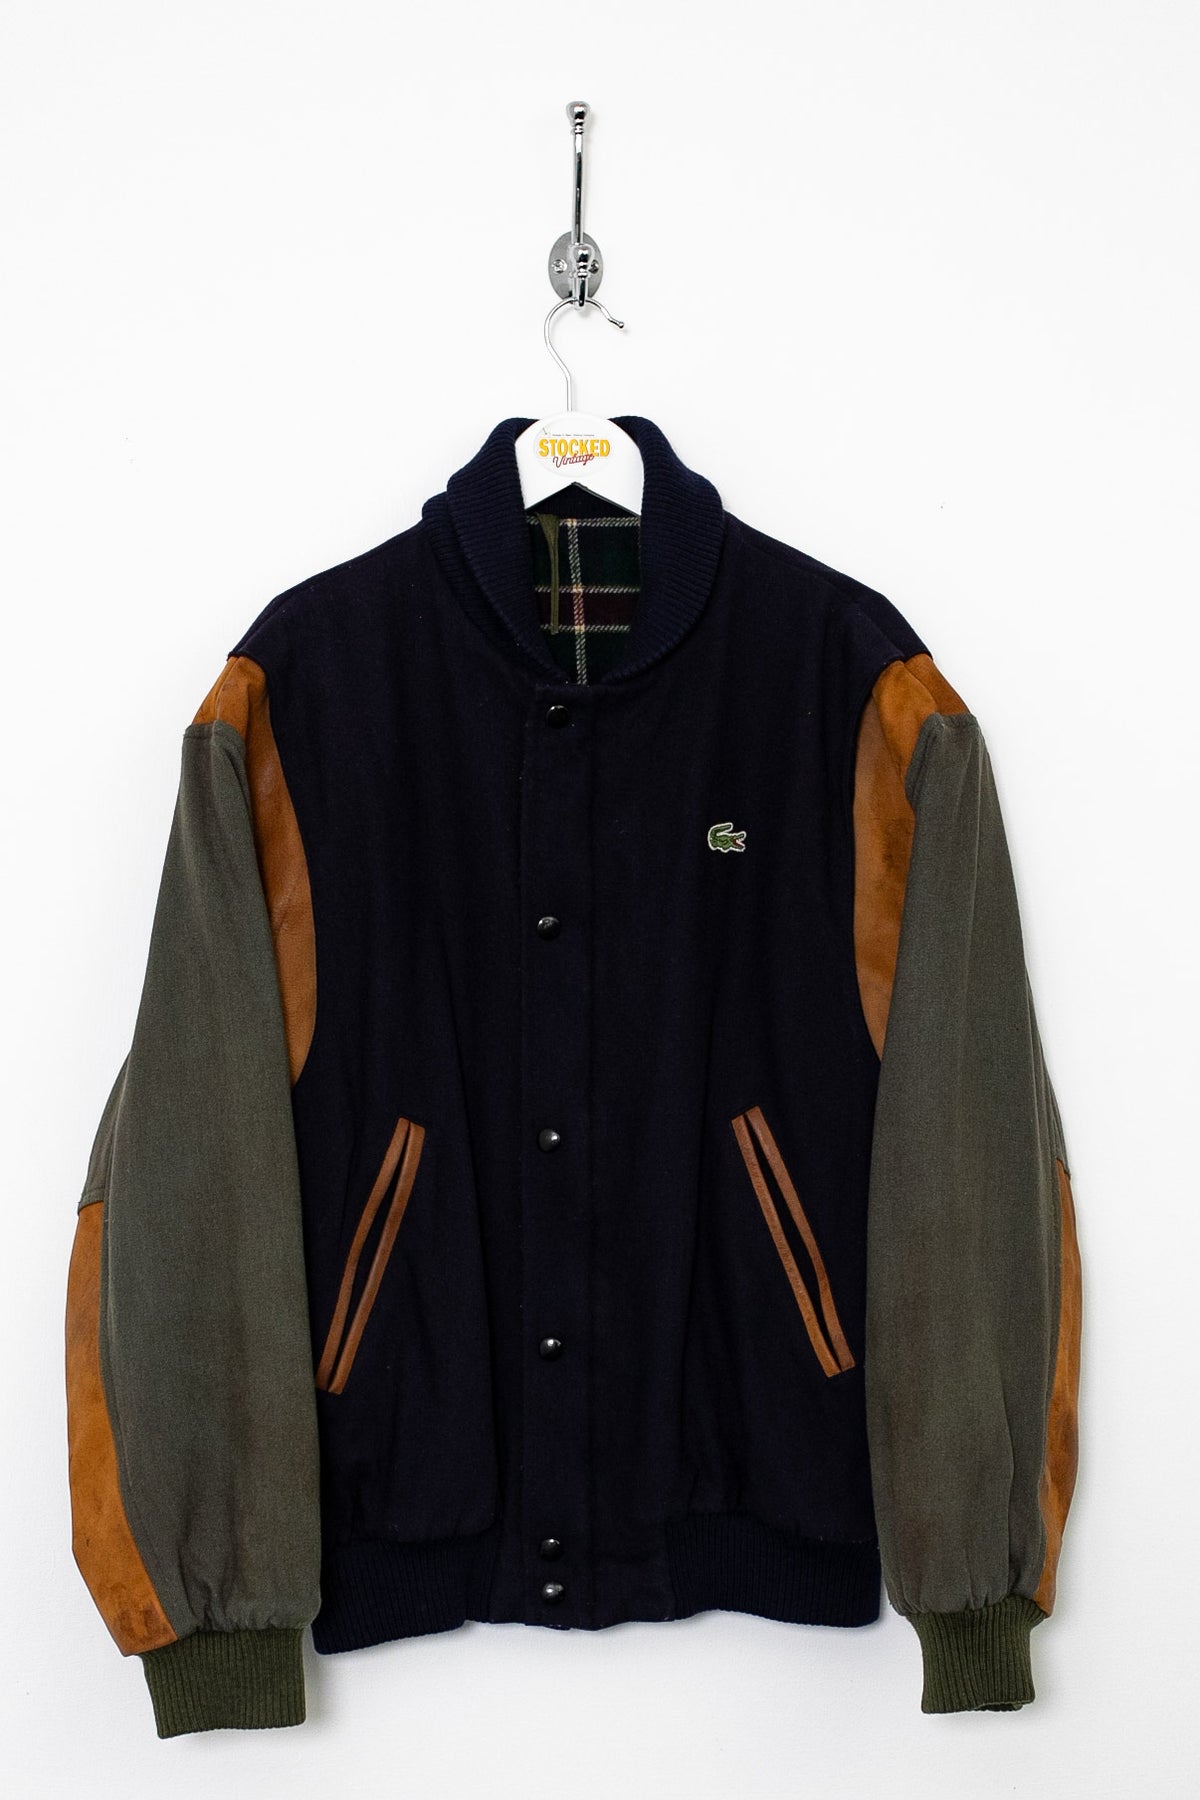 90s Lacoste Wool Bomber Jacket (M)